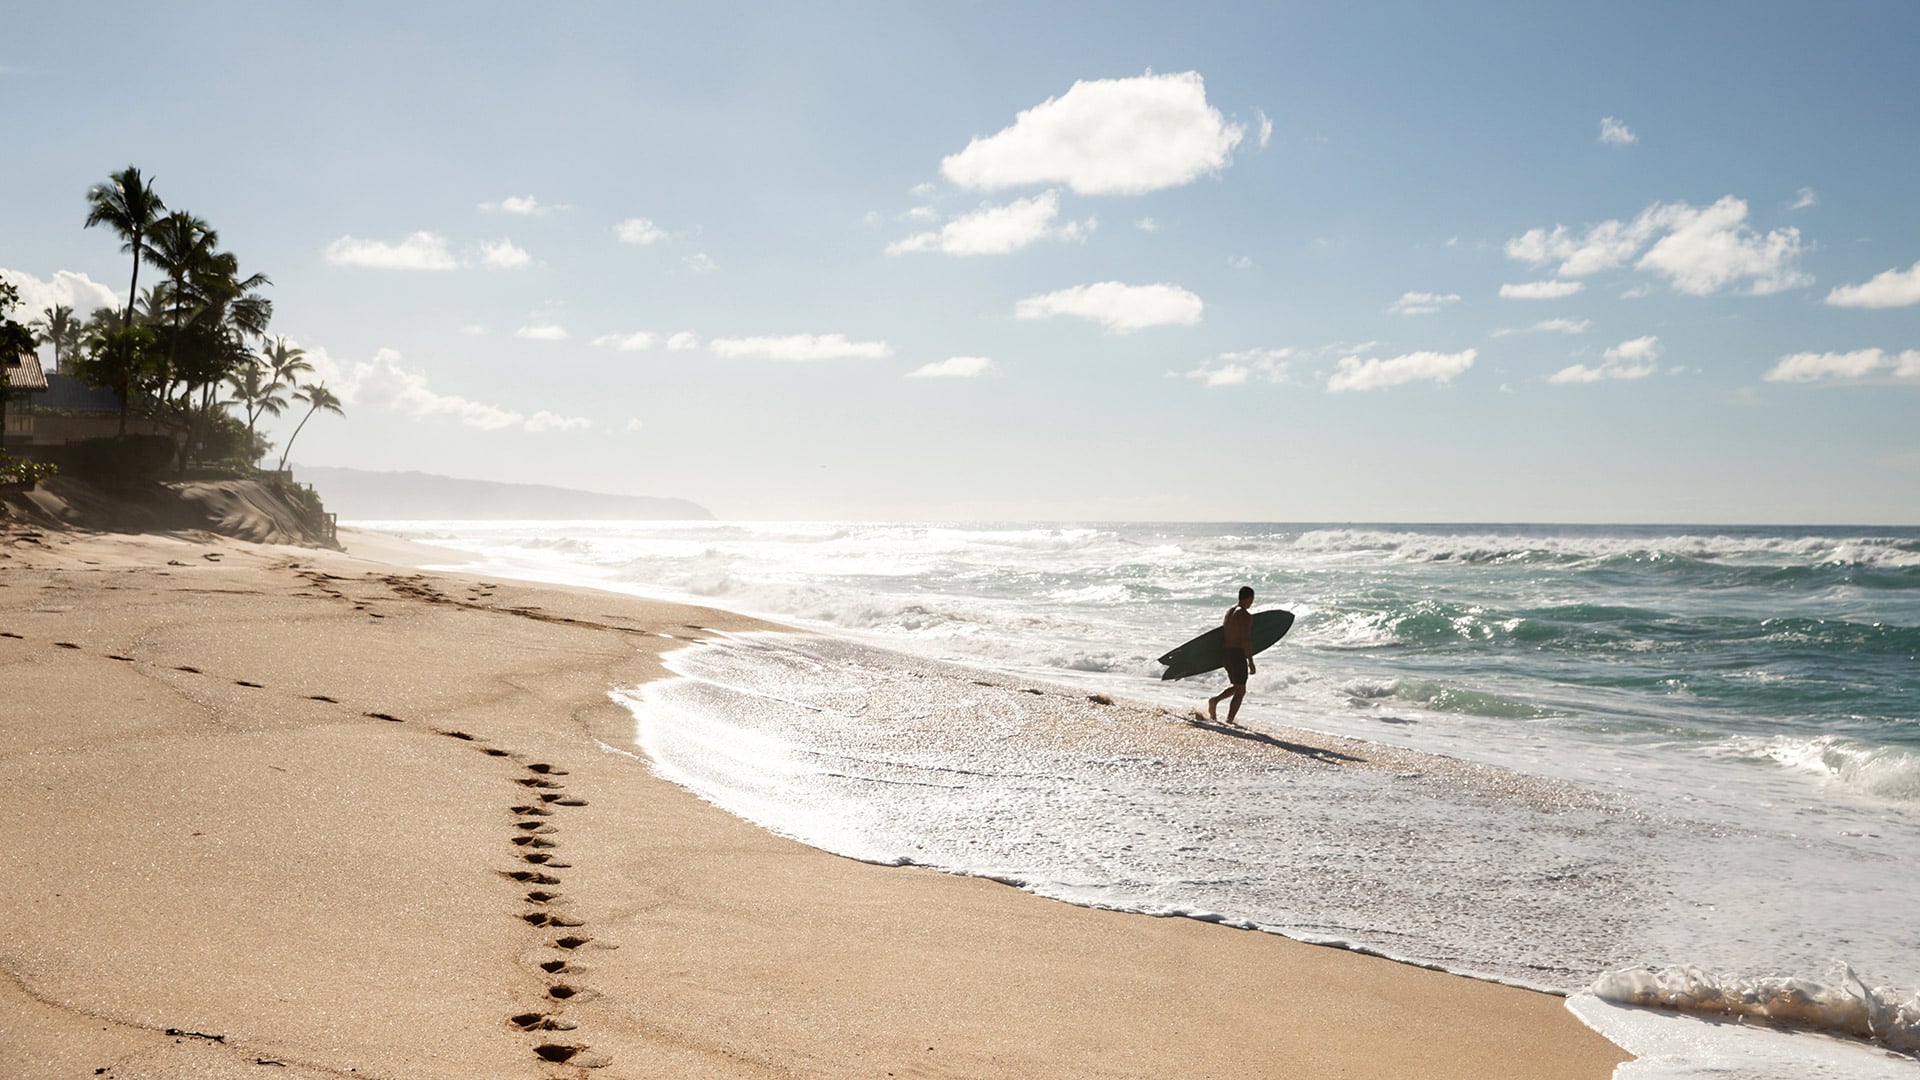 Surfer running on a beach in Oahu, Hawaii